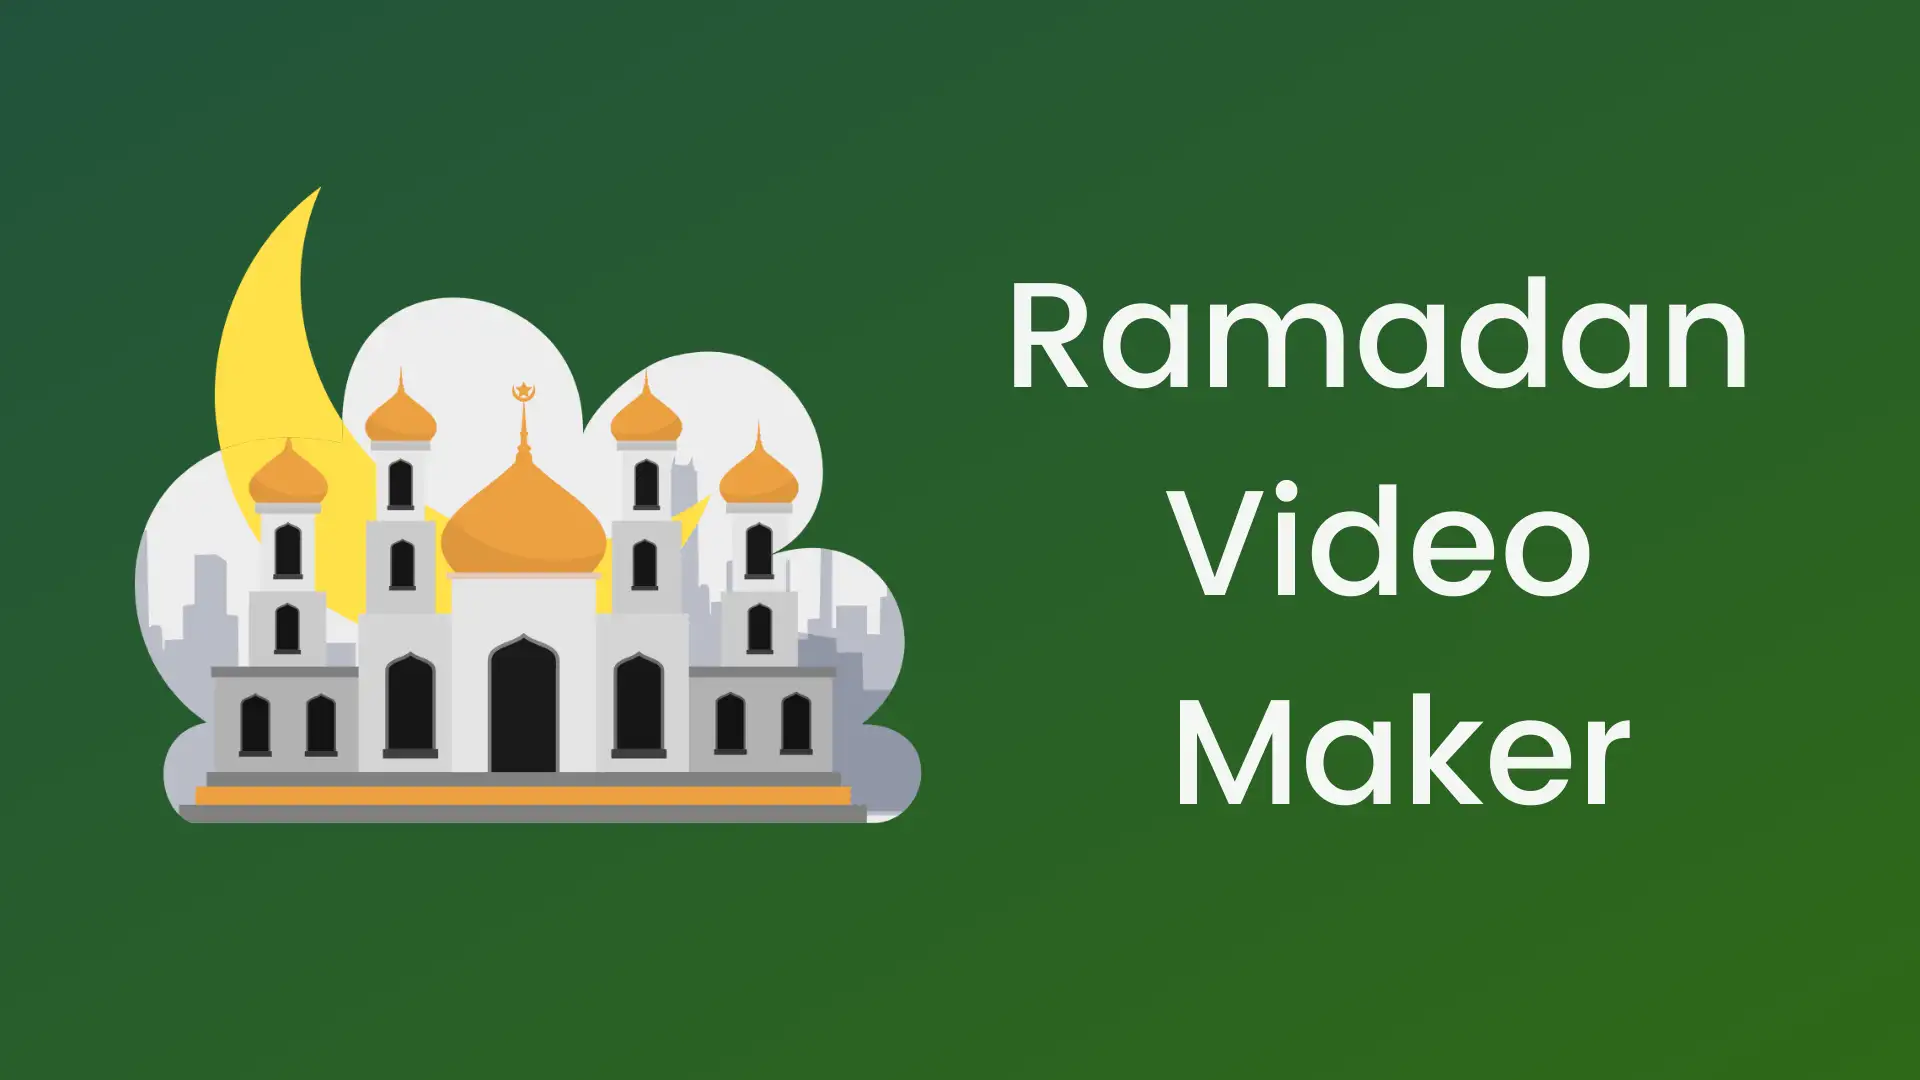 Ramadan video maker banner image